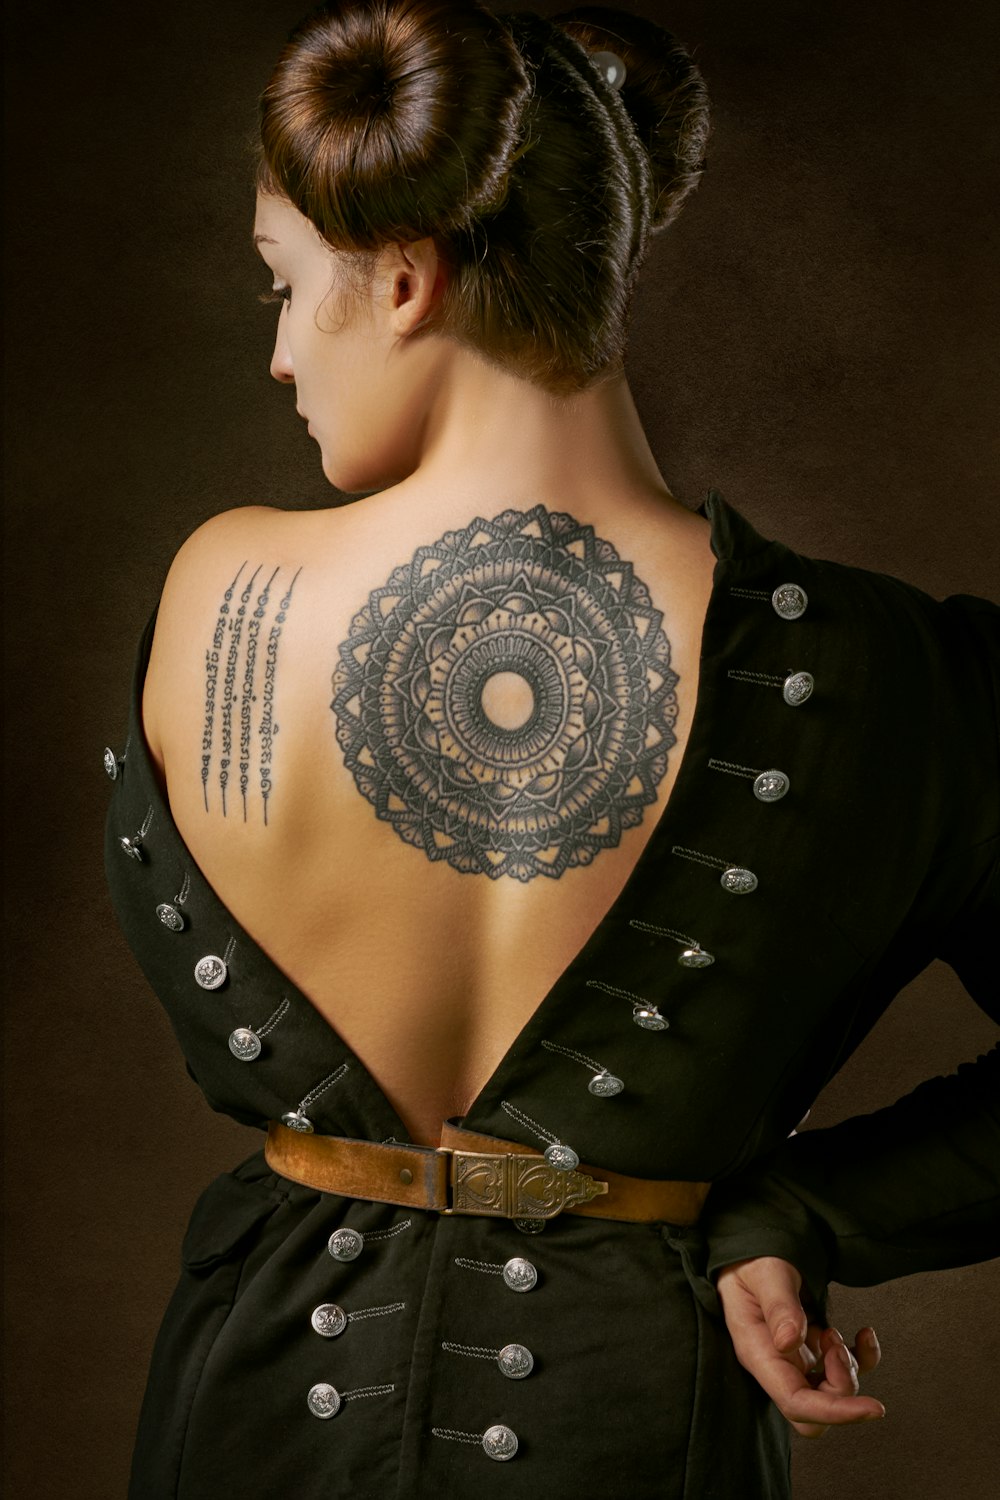 Person doing tattoo photo – Free Tattoo Image on Unsplash